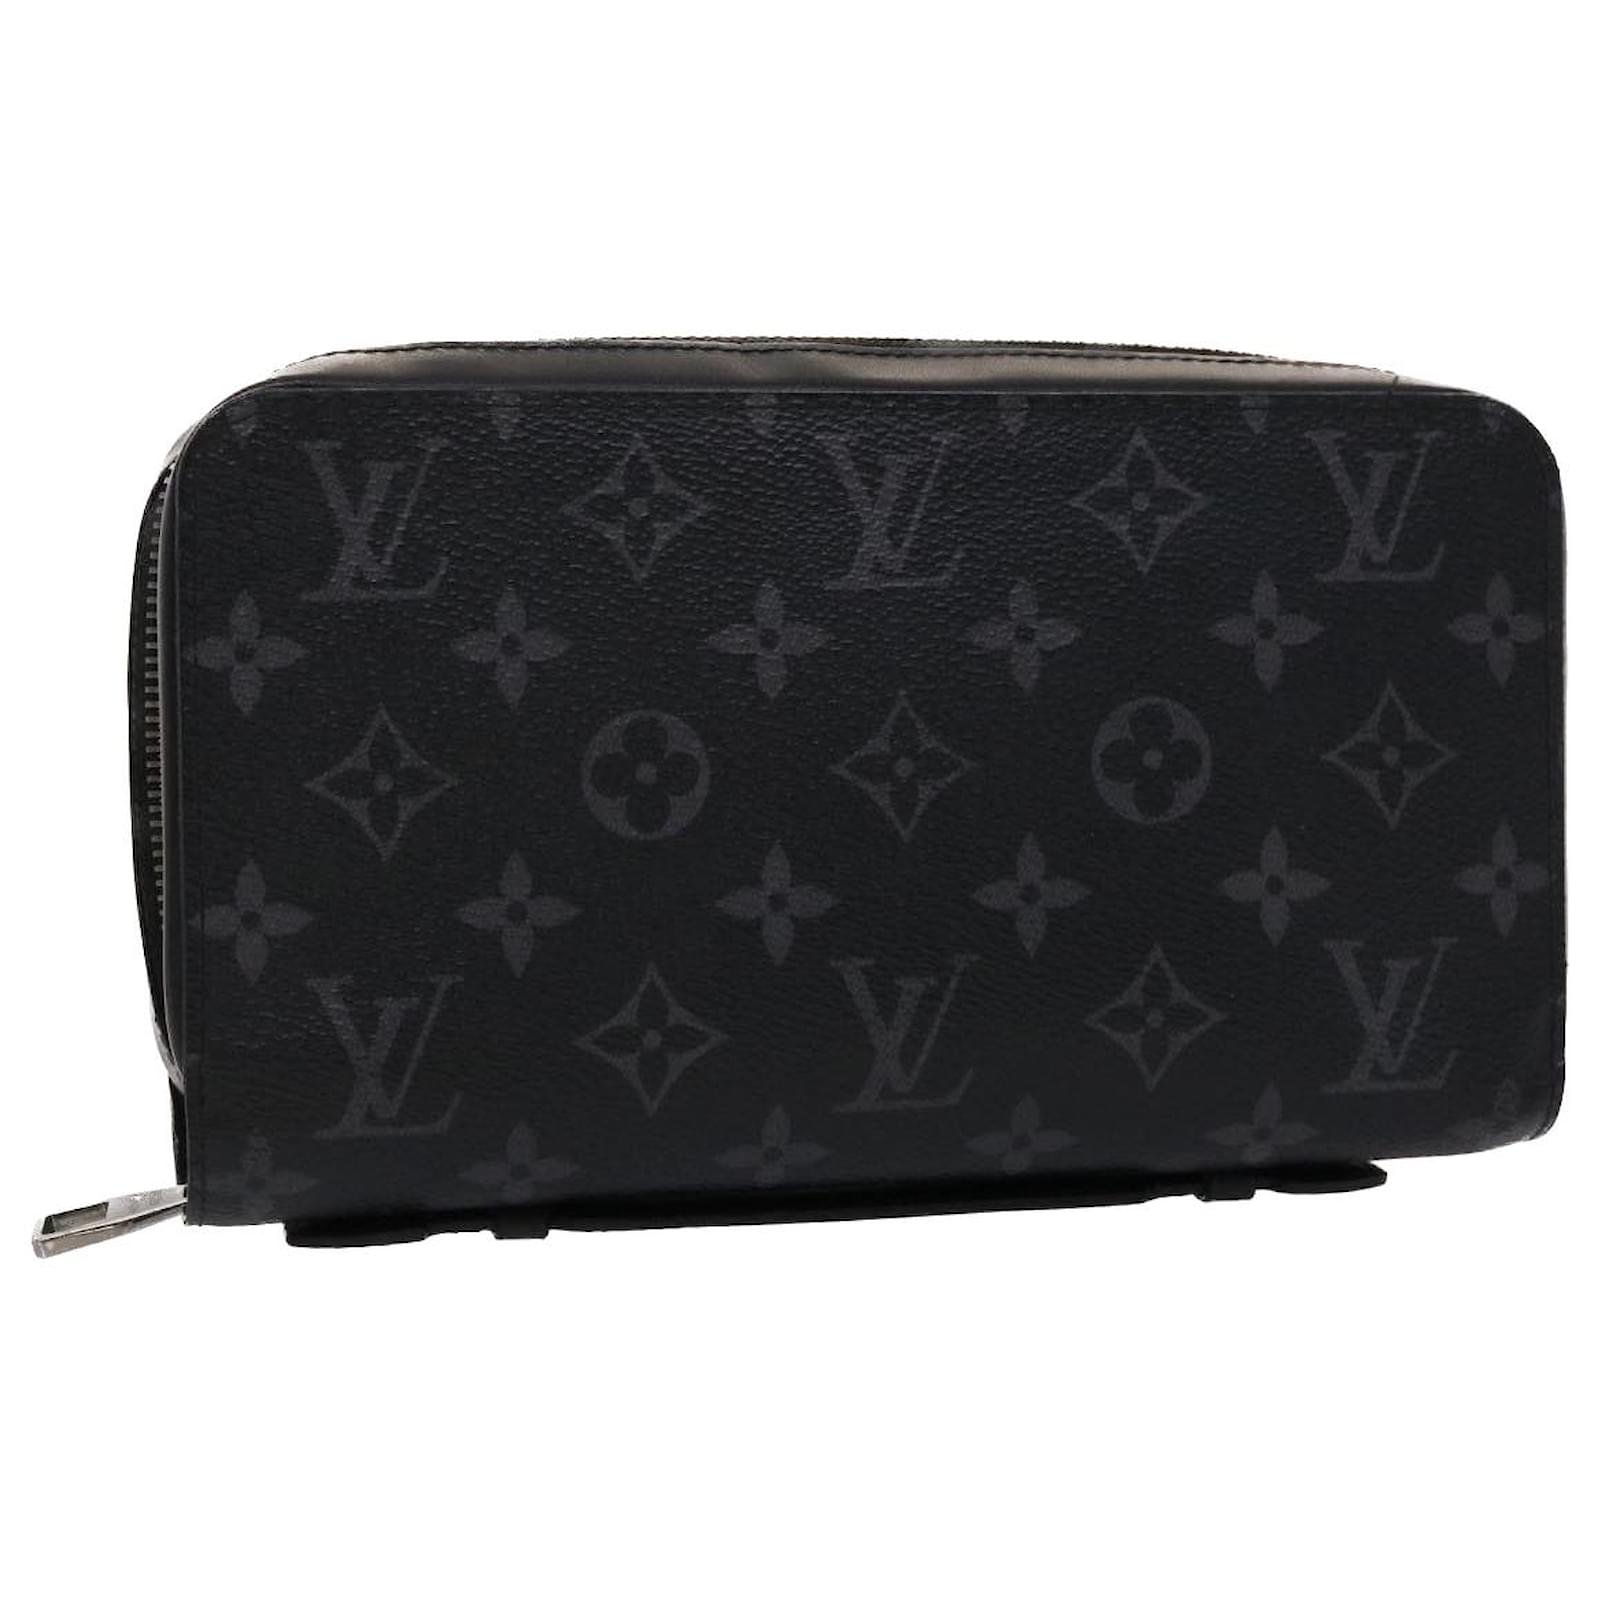 Shop Louis Vuitton Zippy Xl Wallet (WALLET ZIPPY XL, M61698) by Mikrie